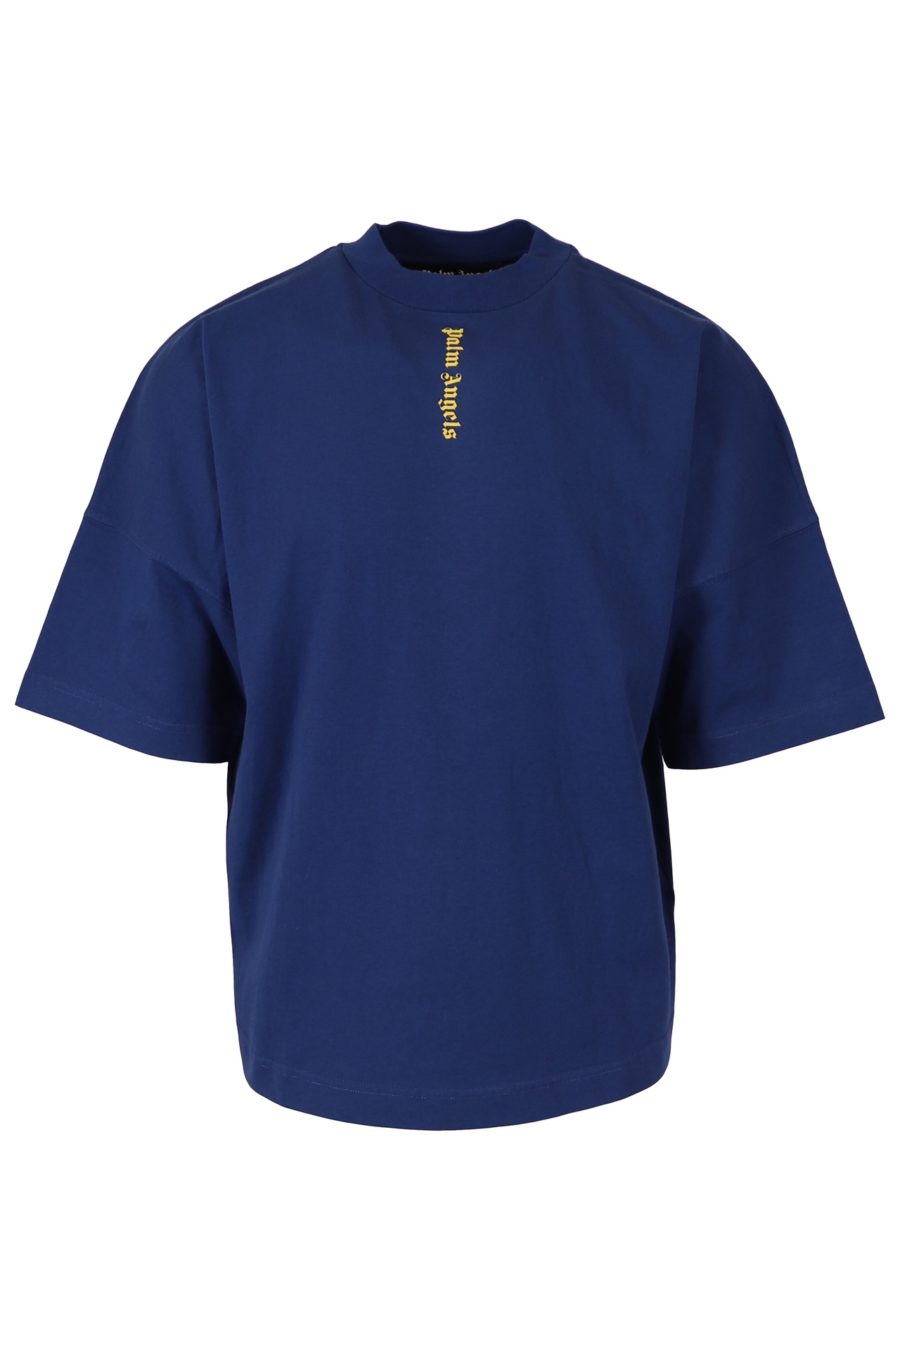 T-shirt Palm Angels azul com logótipo vertical amarelo - 903bc0ec2a8179621e1724c2dbadc8330e1ccbd6